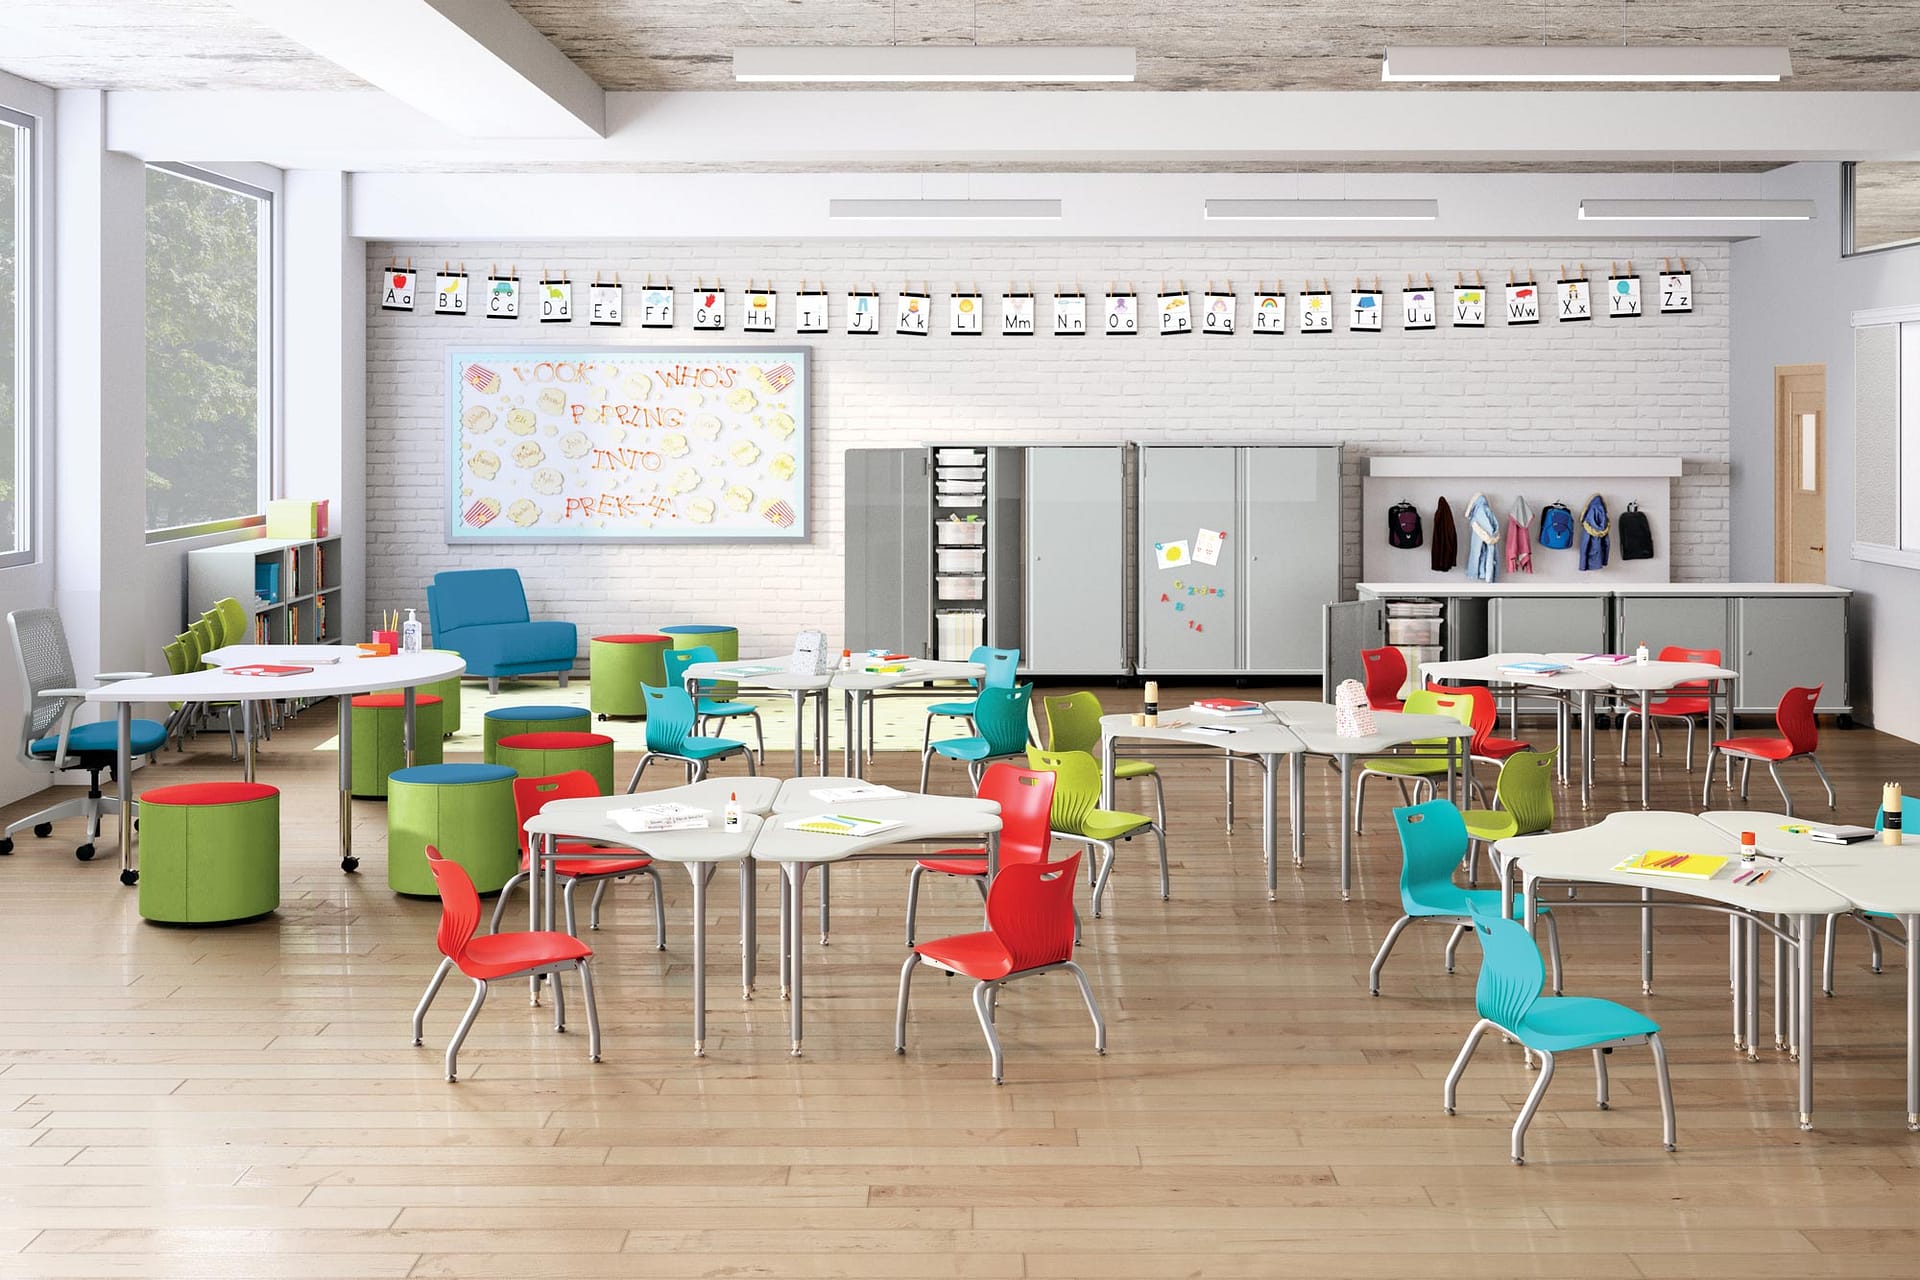 Classroom Educational Furniture Manufacturer